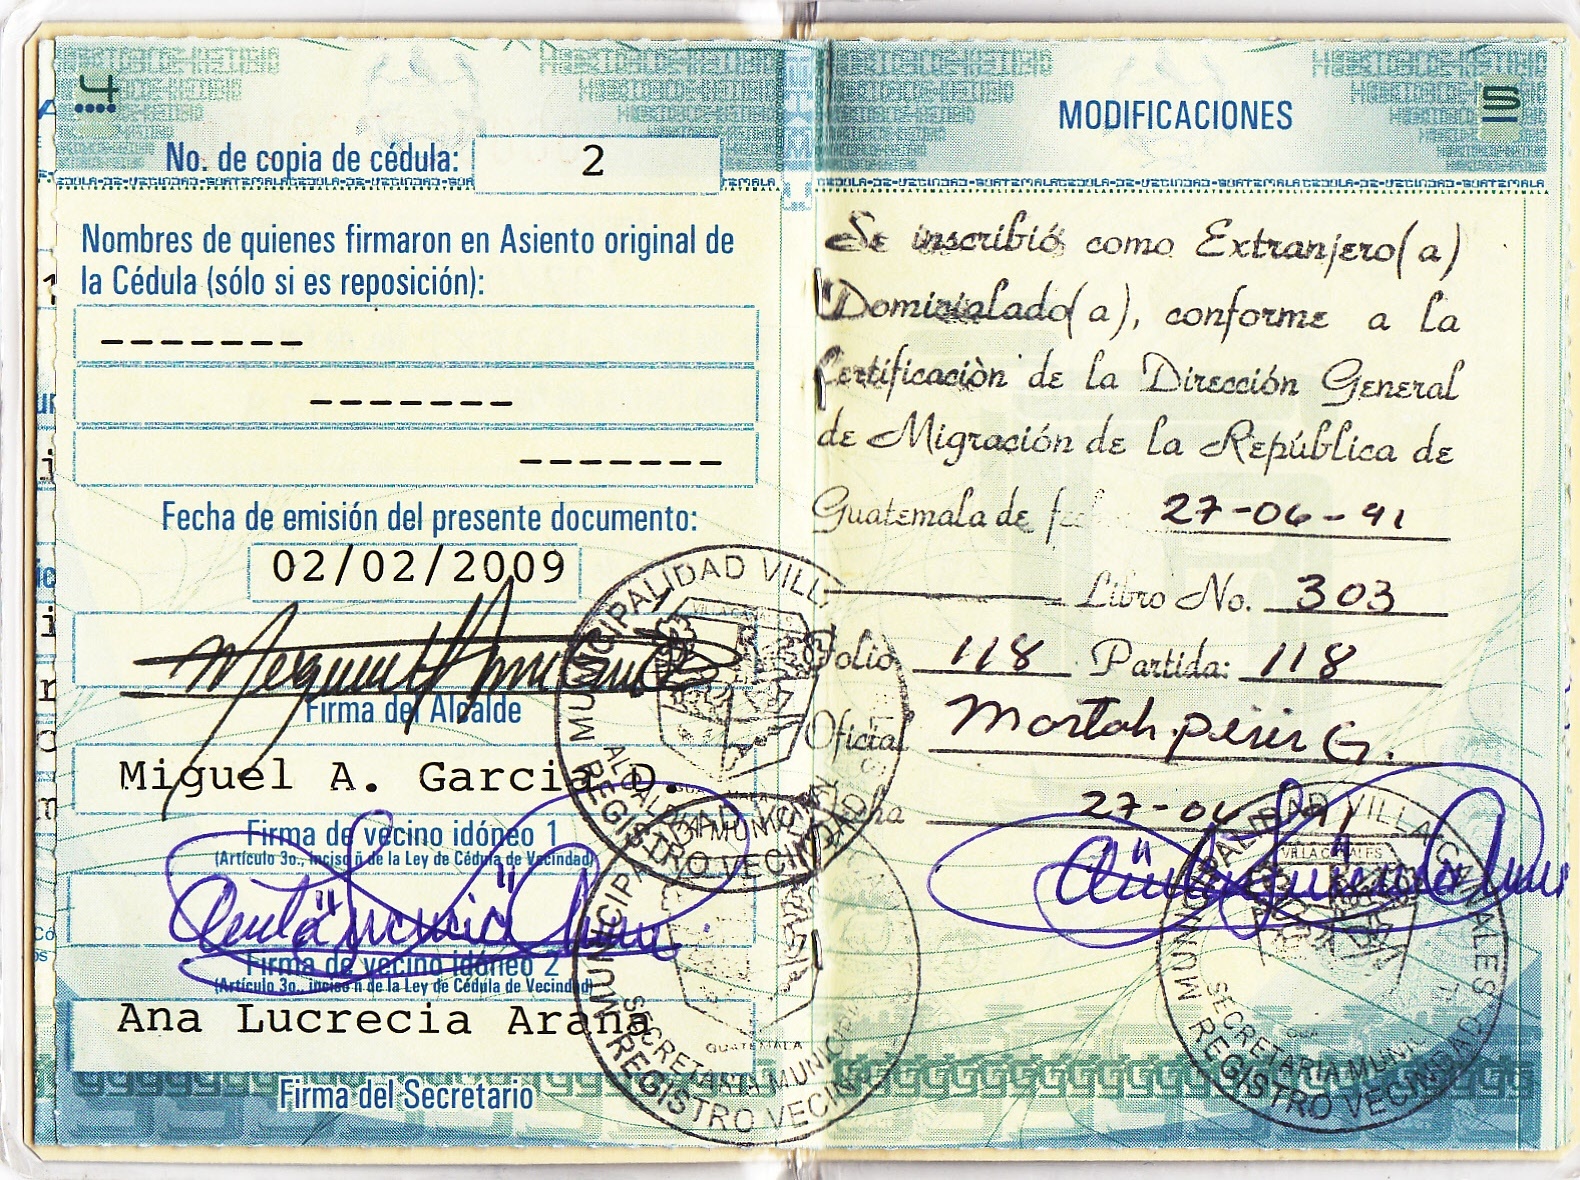 Cedula issued by mayor of Villa Canales - Miguel Angel Garcia Dominguez